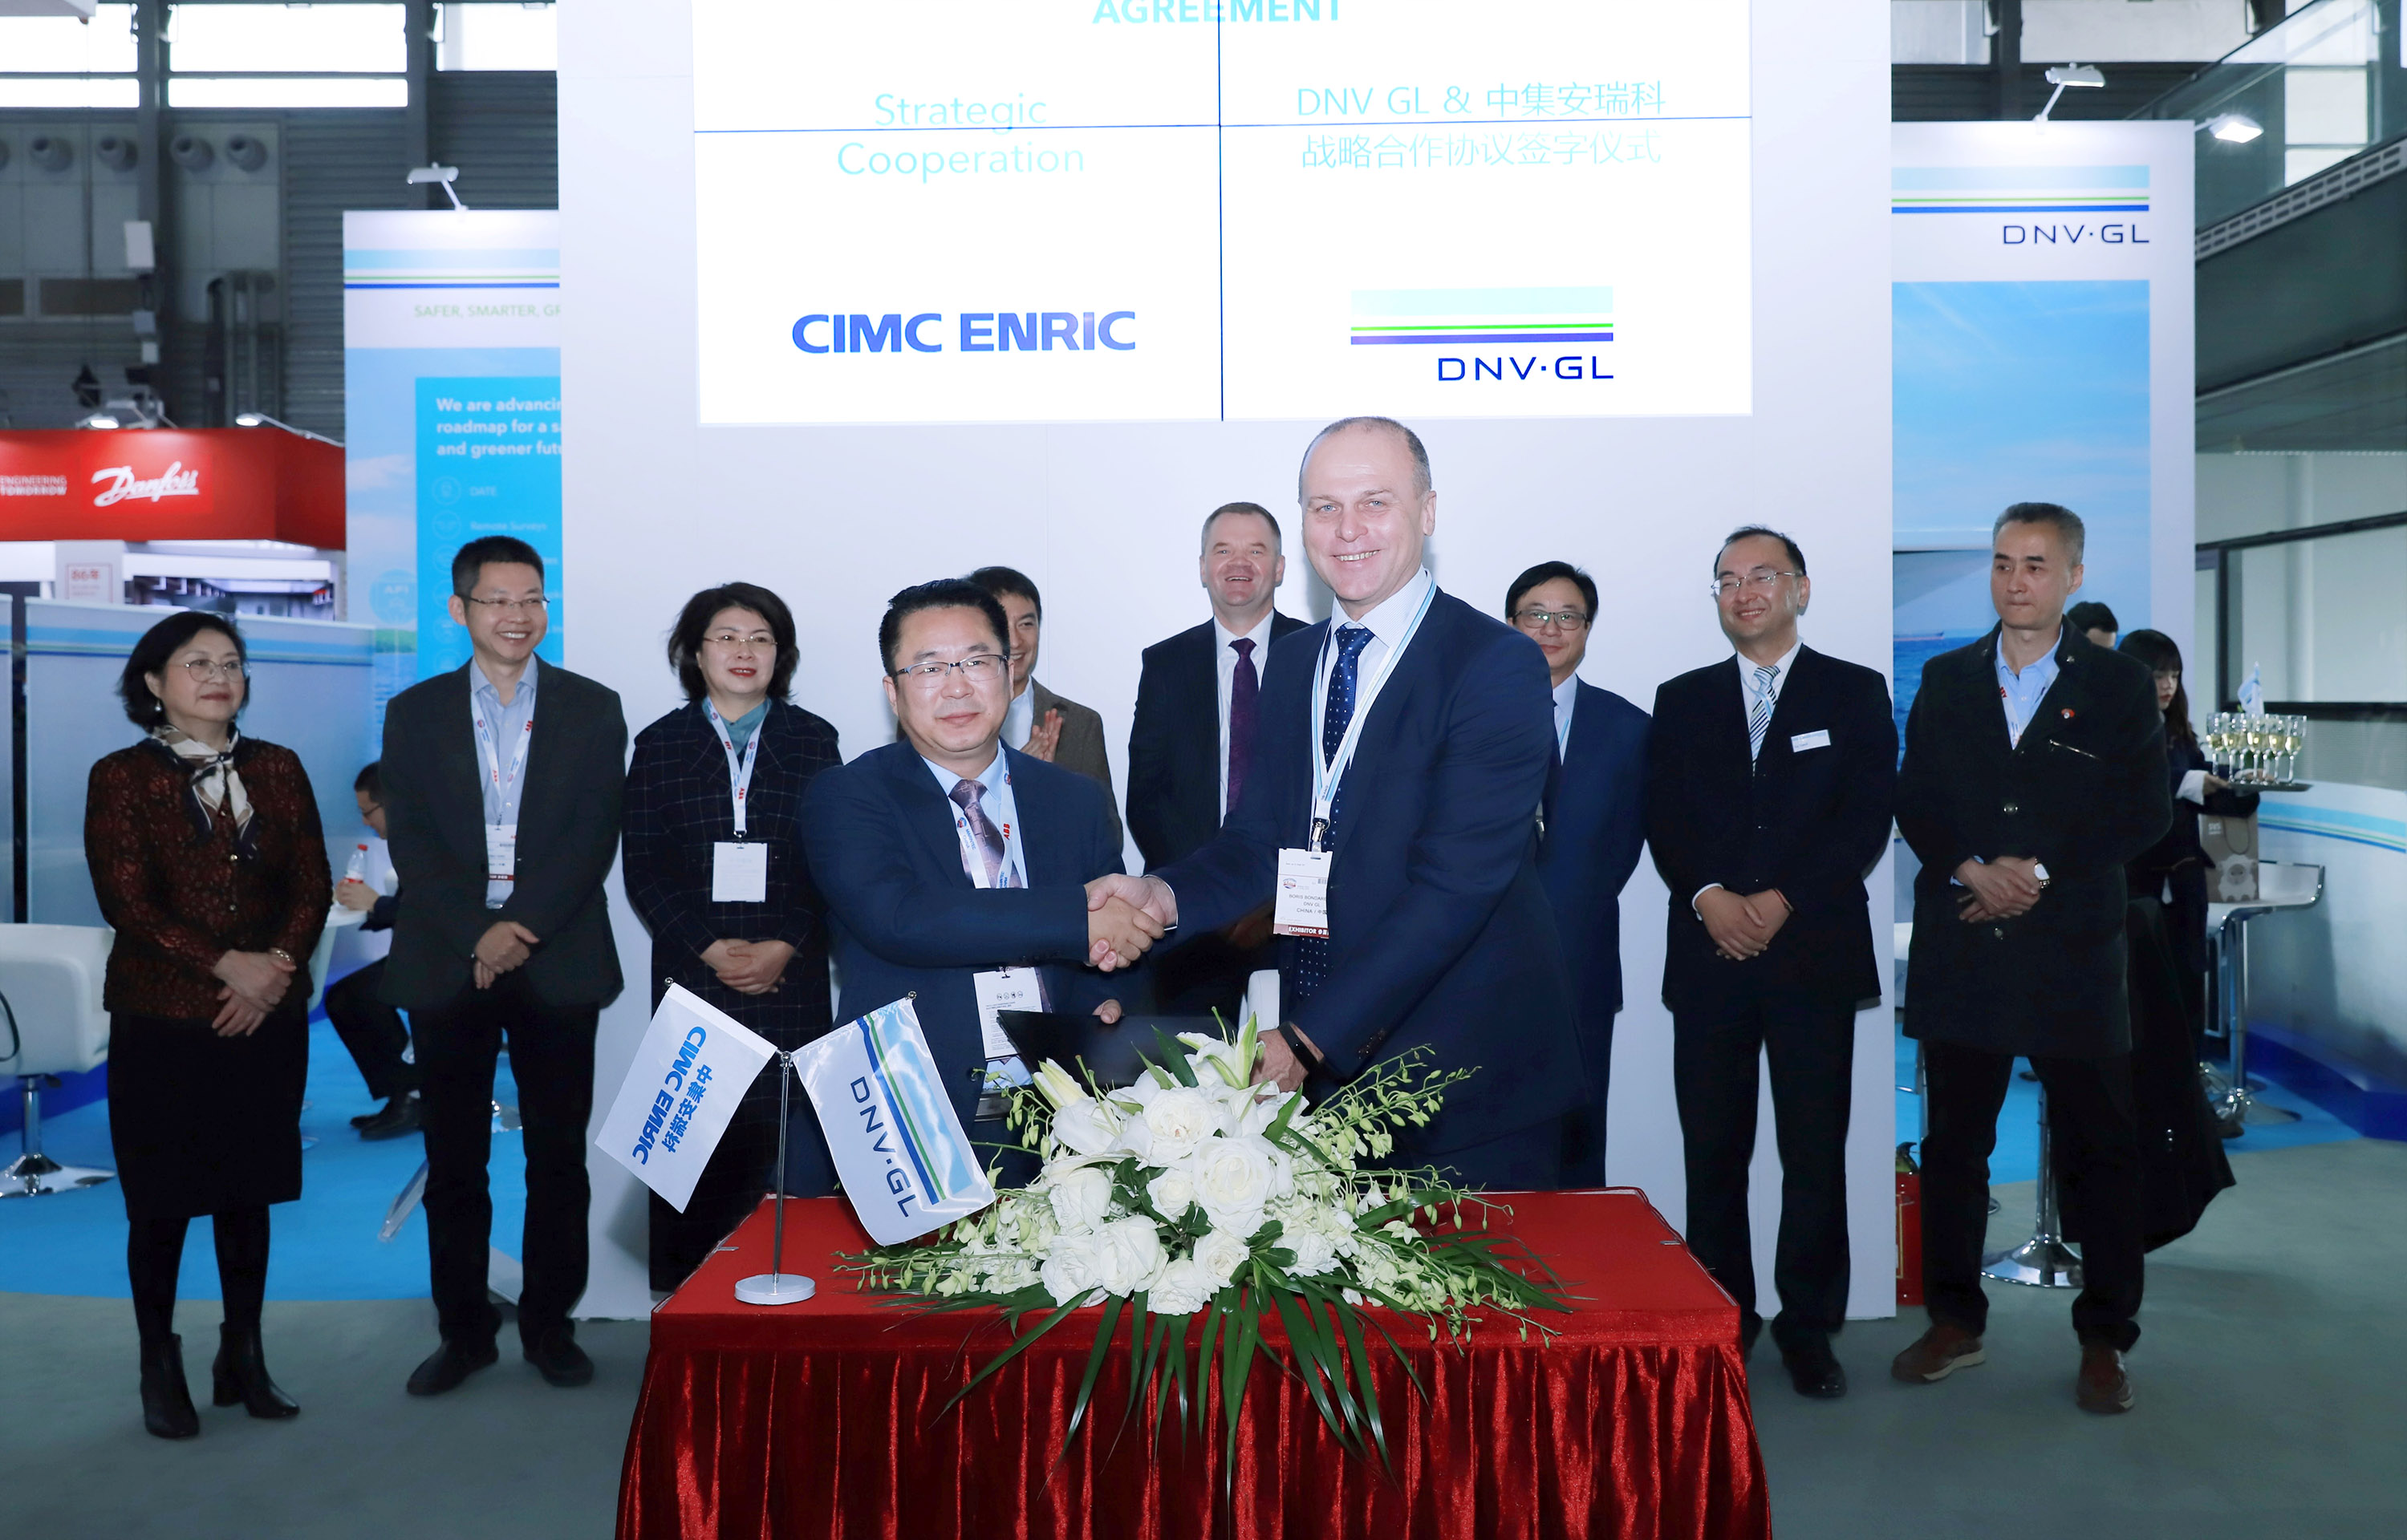 CIMC ENRIC, DNV GL expand LNG partnership